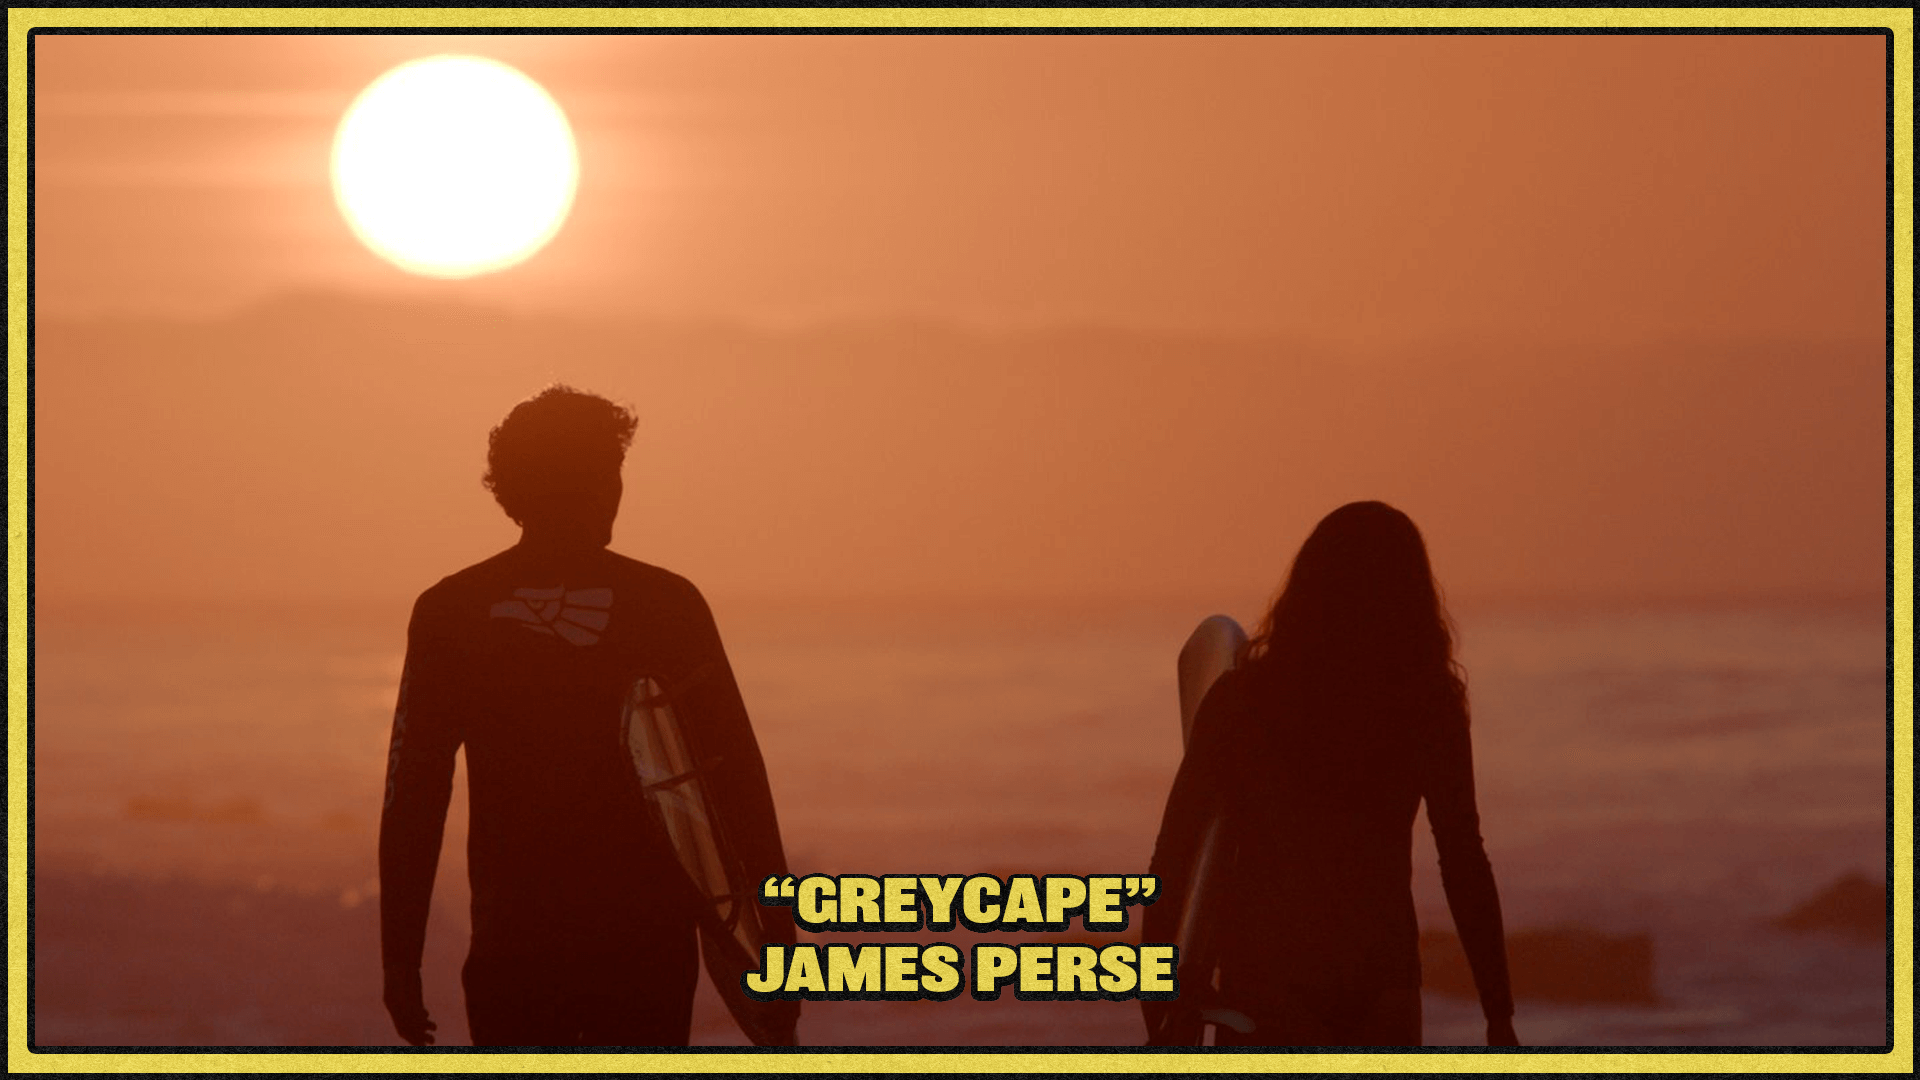 James-Perse-Greycape-Ben-Montez-Editor.png